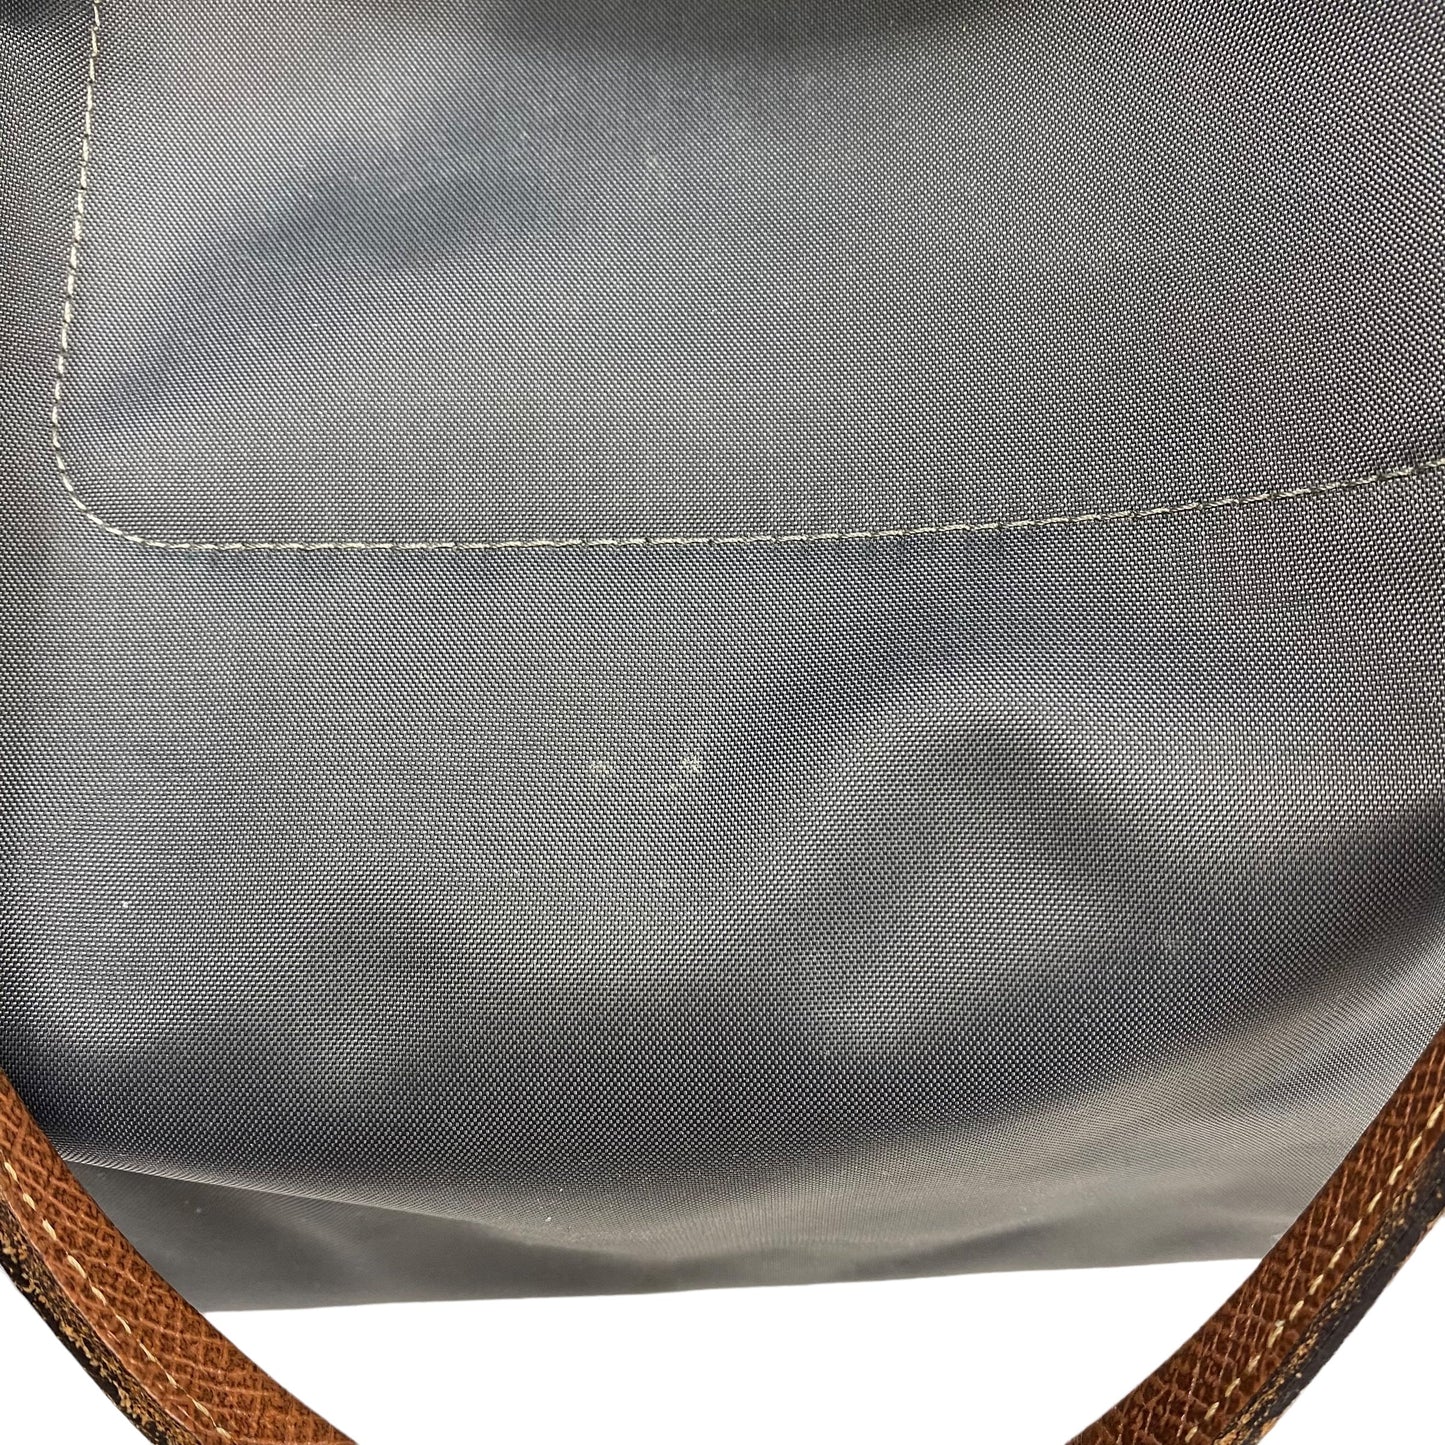 Handbag Designer By Longchamp  Size: Large